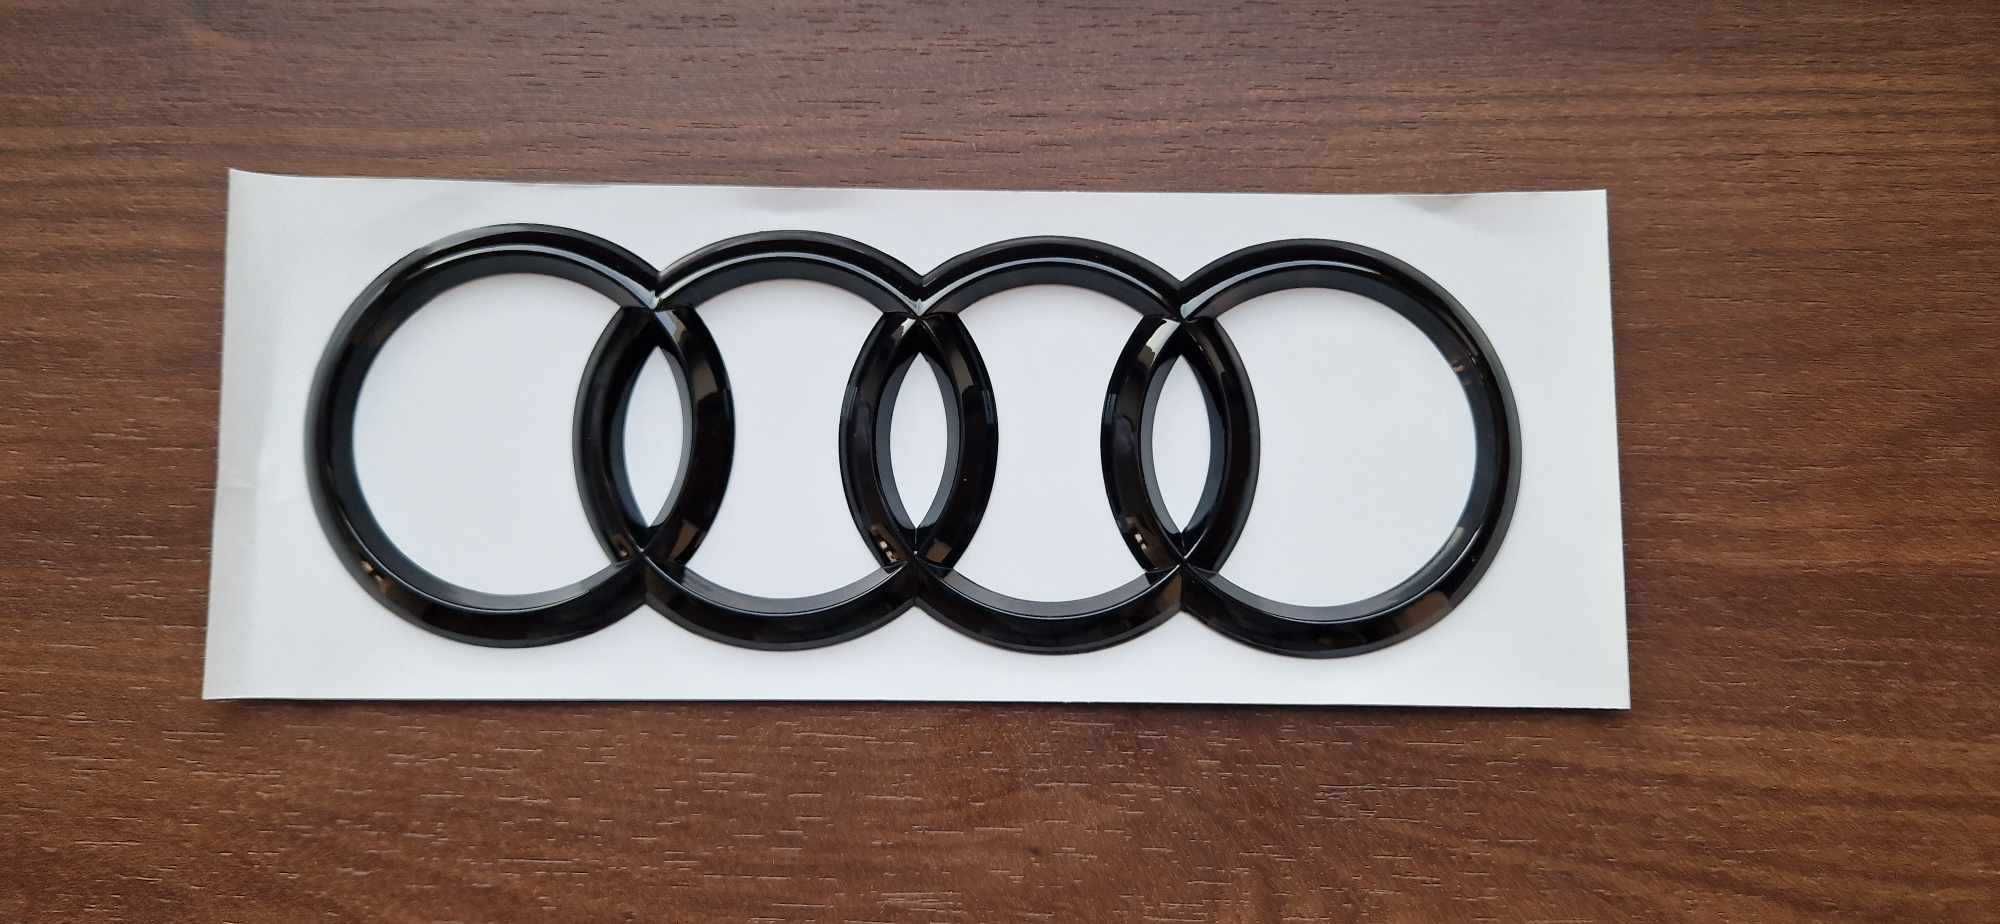 Emblemat Znaczek Tył Audi Q7 230x80